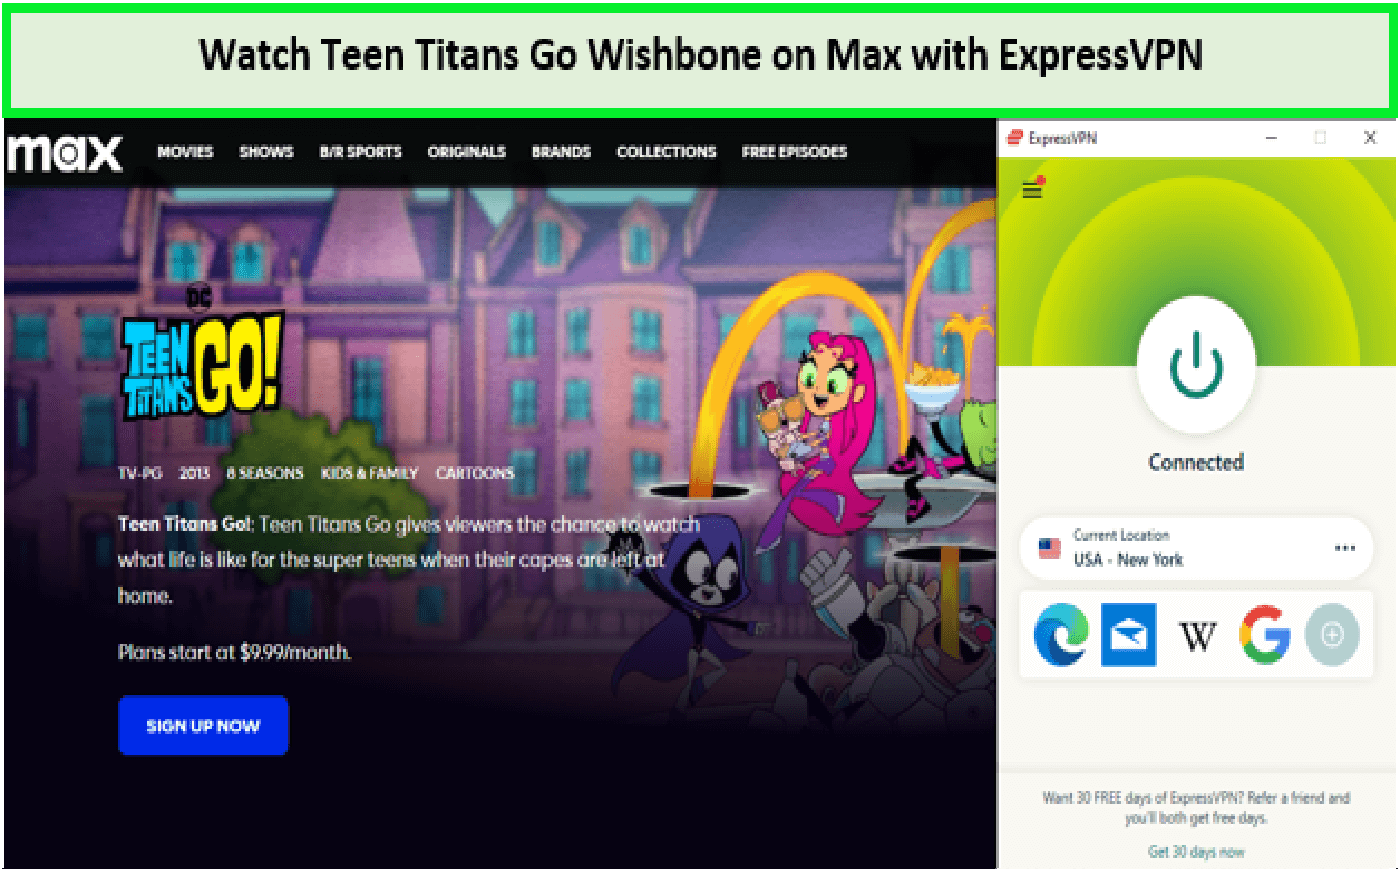 Watch-Teen-Titans-Go-Wishbone-in-New Zealand-on-Max-with-ExpressVPN